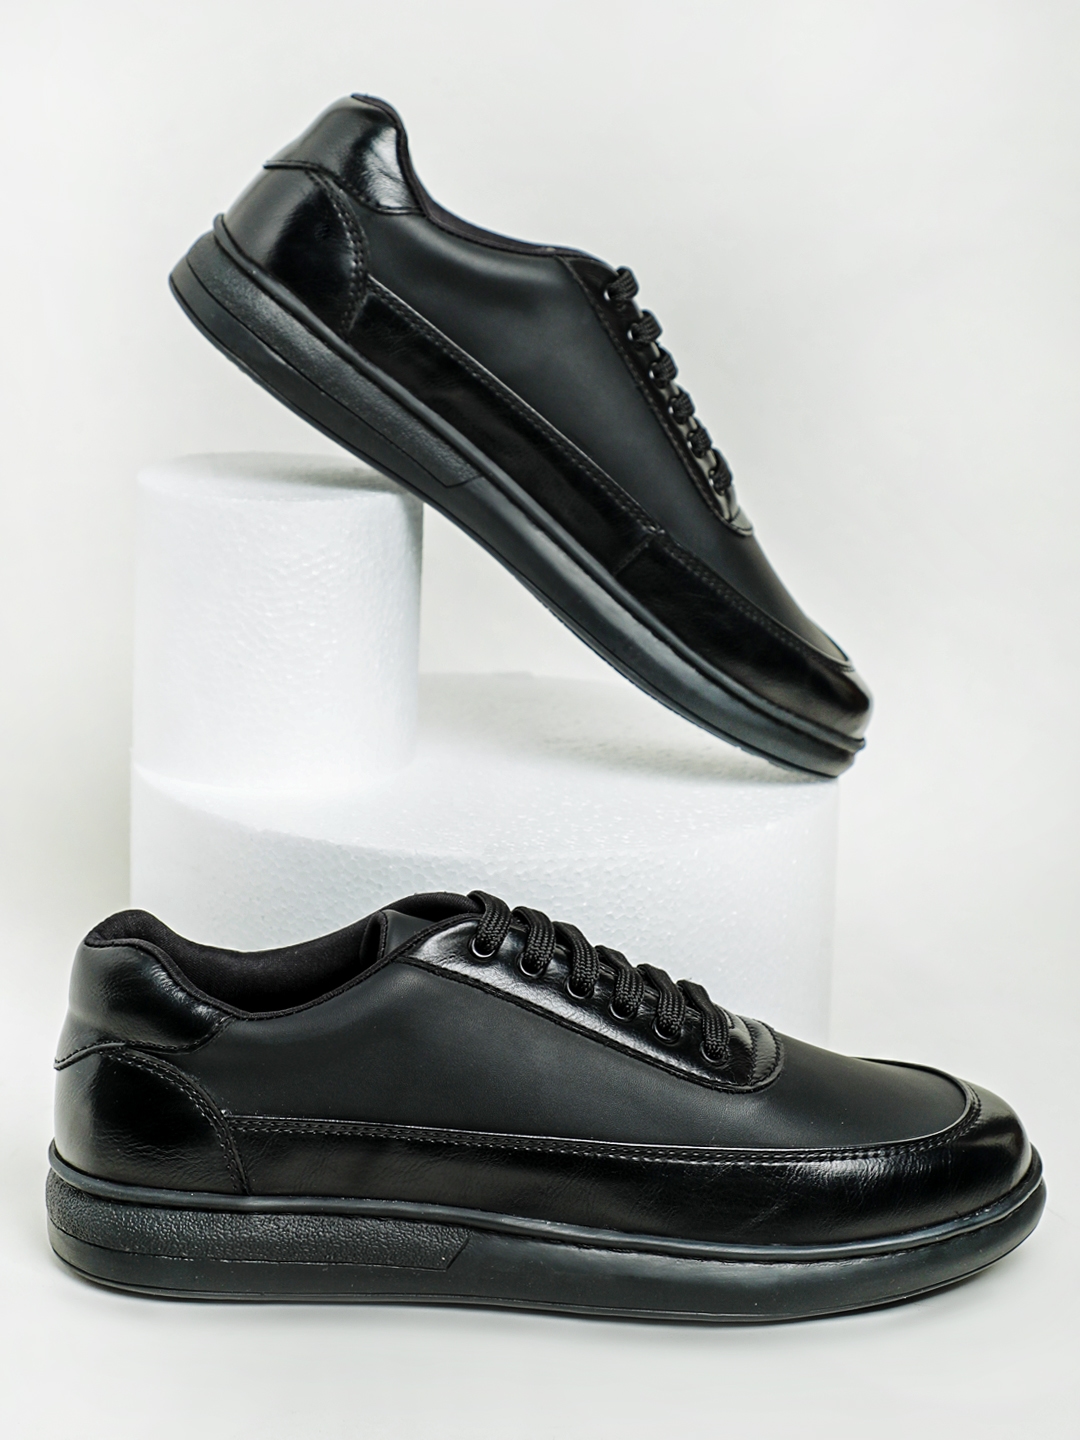 Buy Black Formal Shoes Online at upto 80% off | Myntra